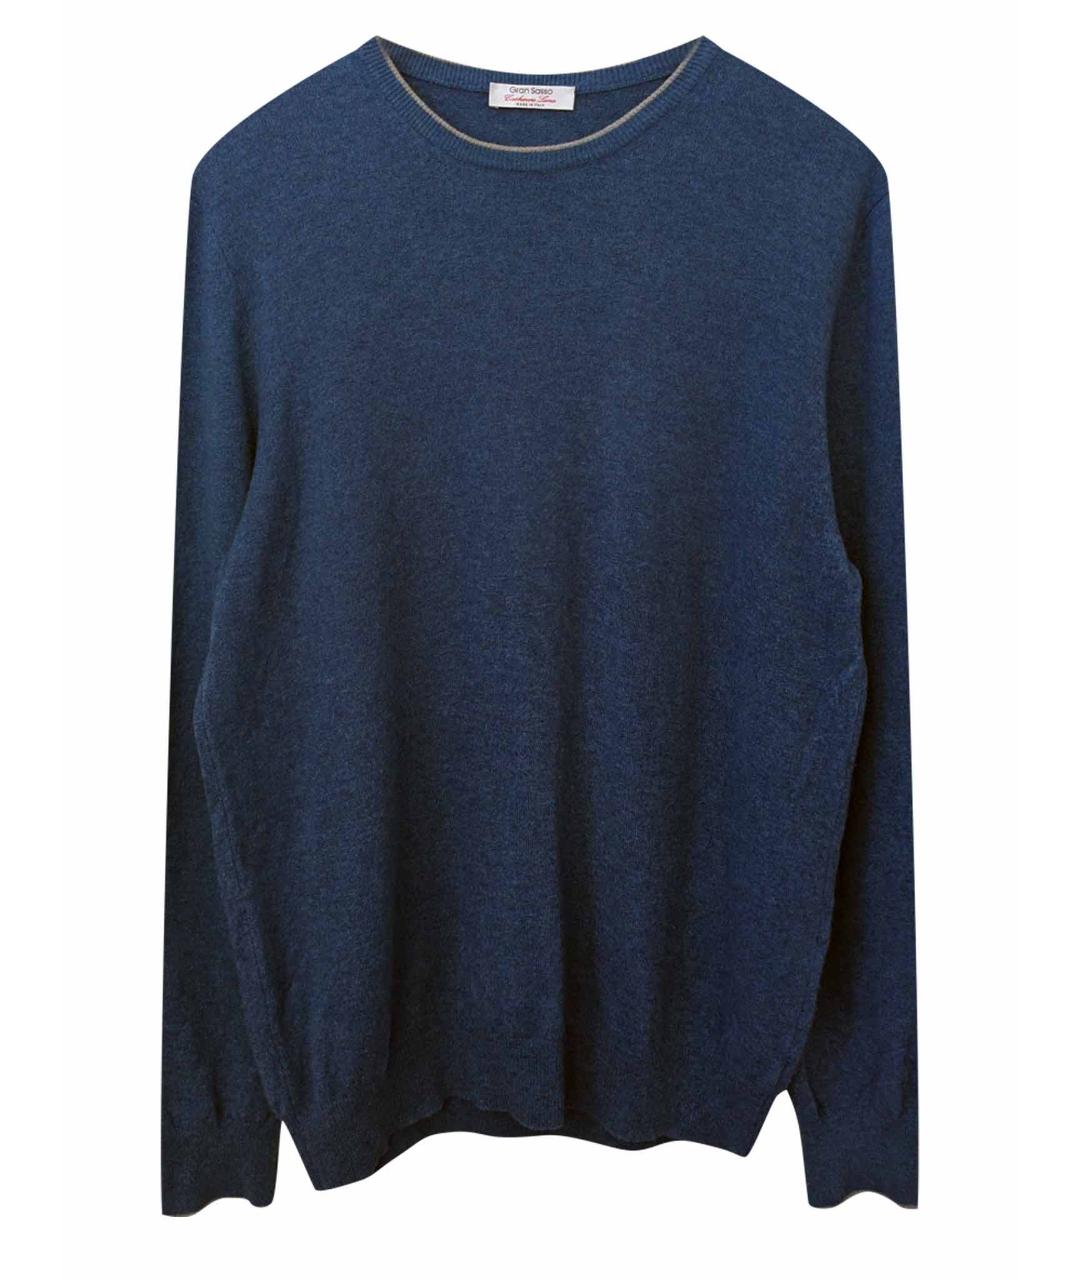 GRAN SASSO Синий шерстяной джемпер / свитер, фото 1